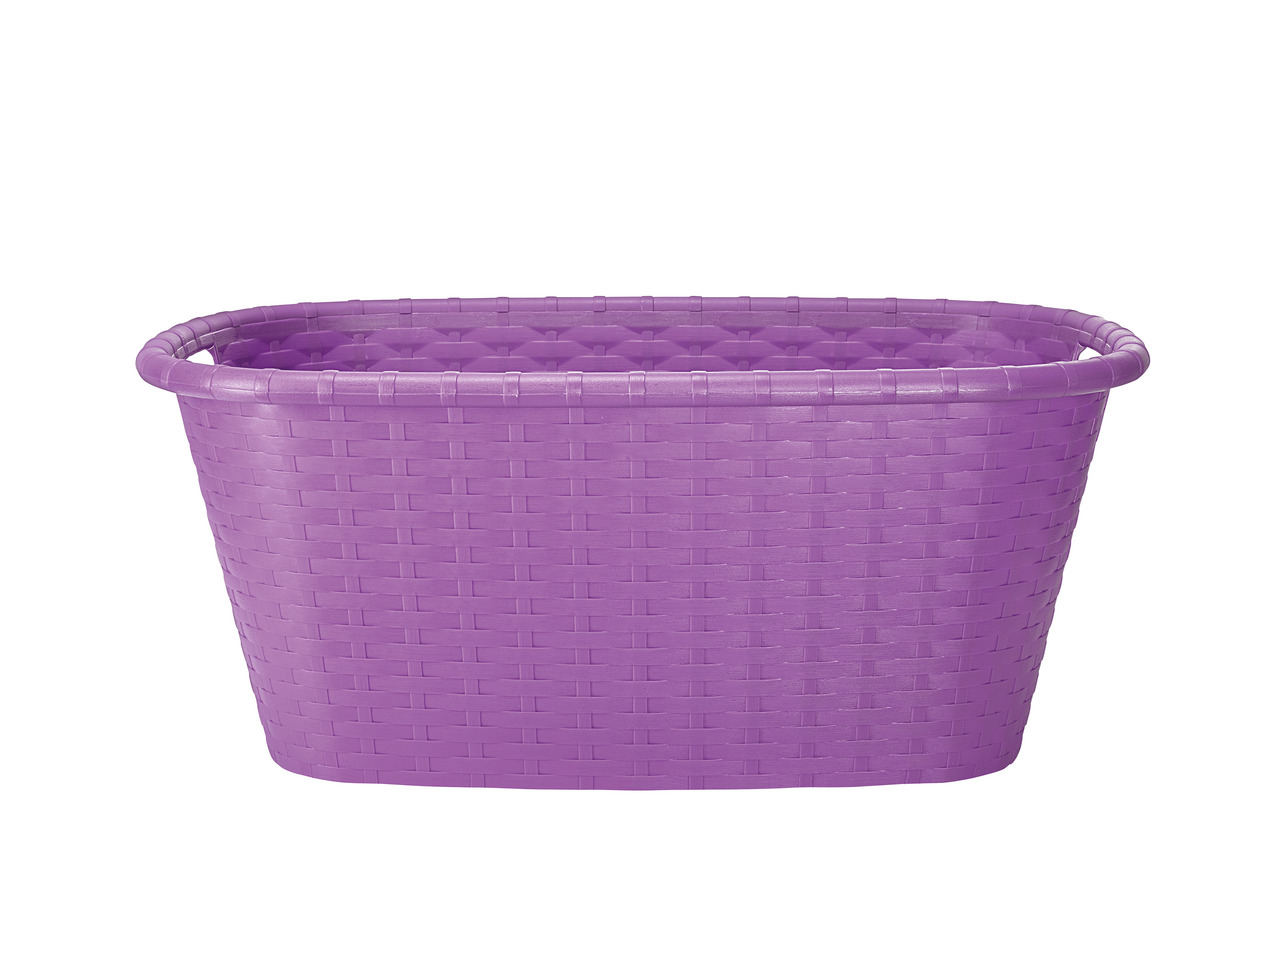 Aquapur Rattan-Effect Laundry Basket1